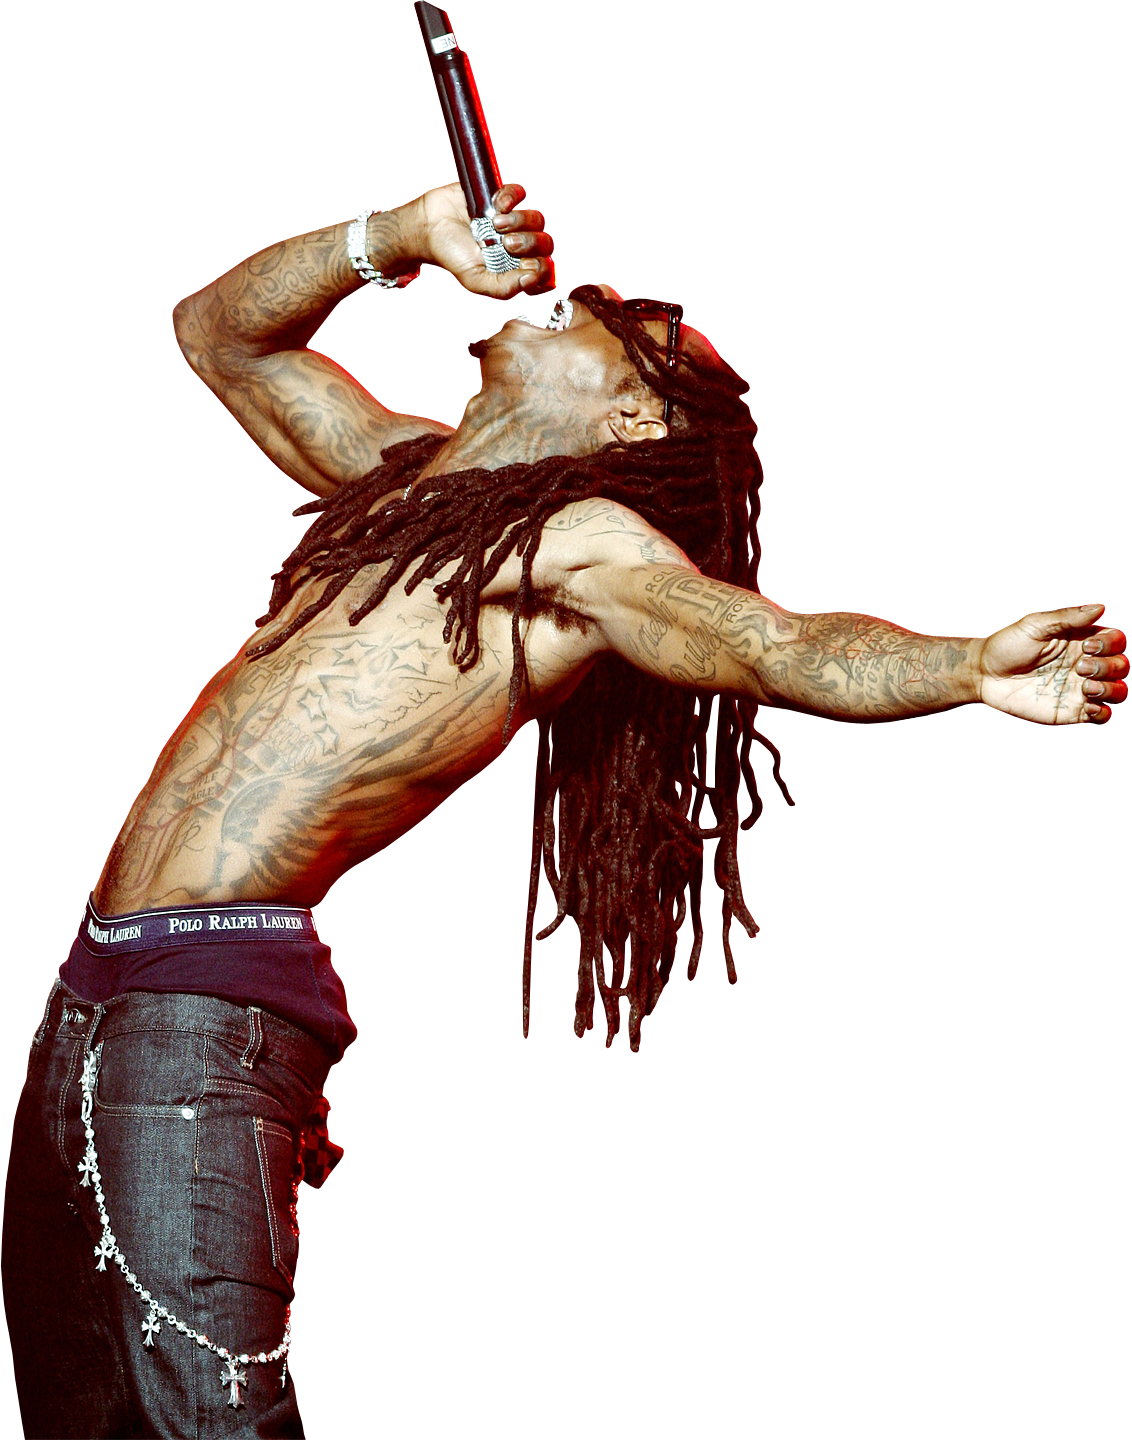 Similar Lil Wayne PNG Image